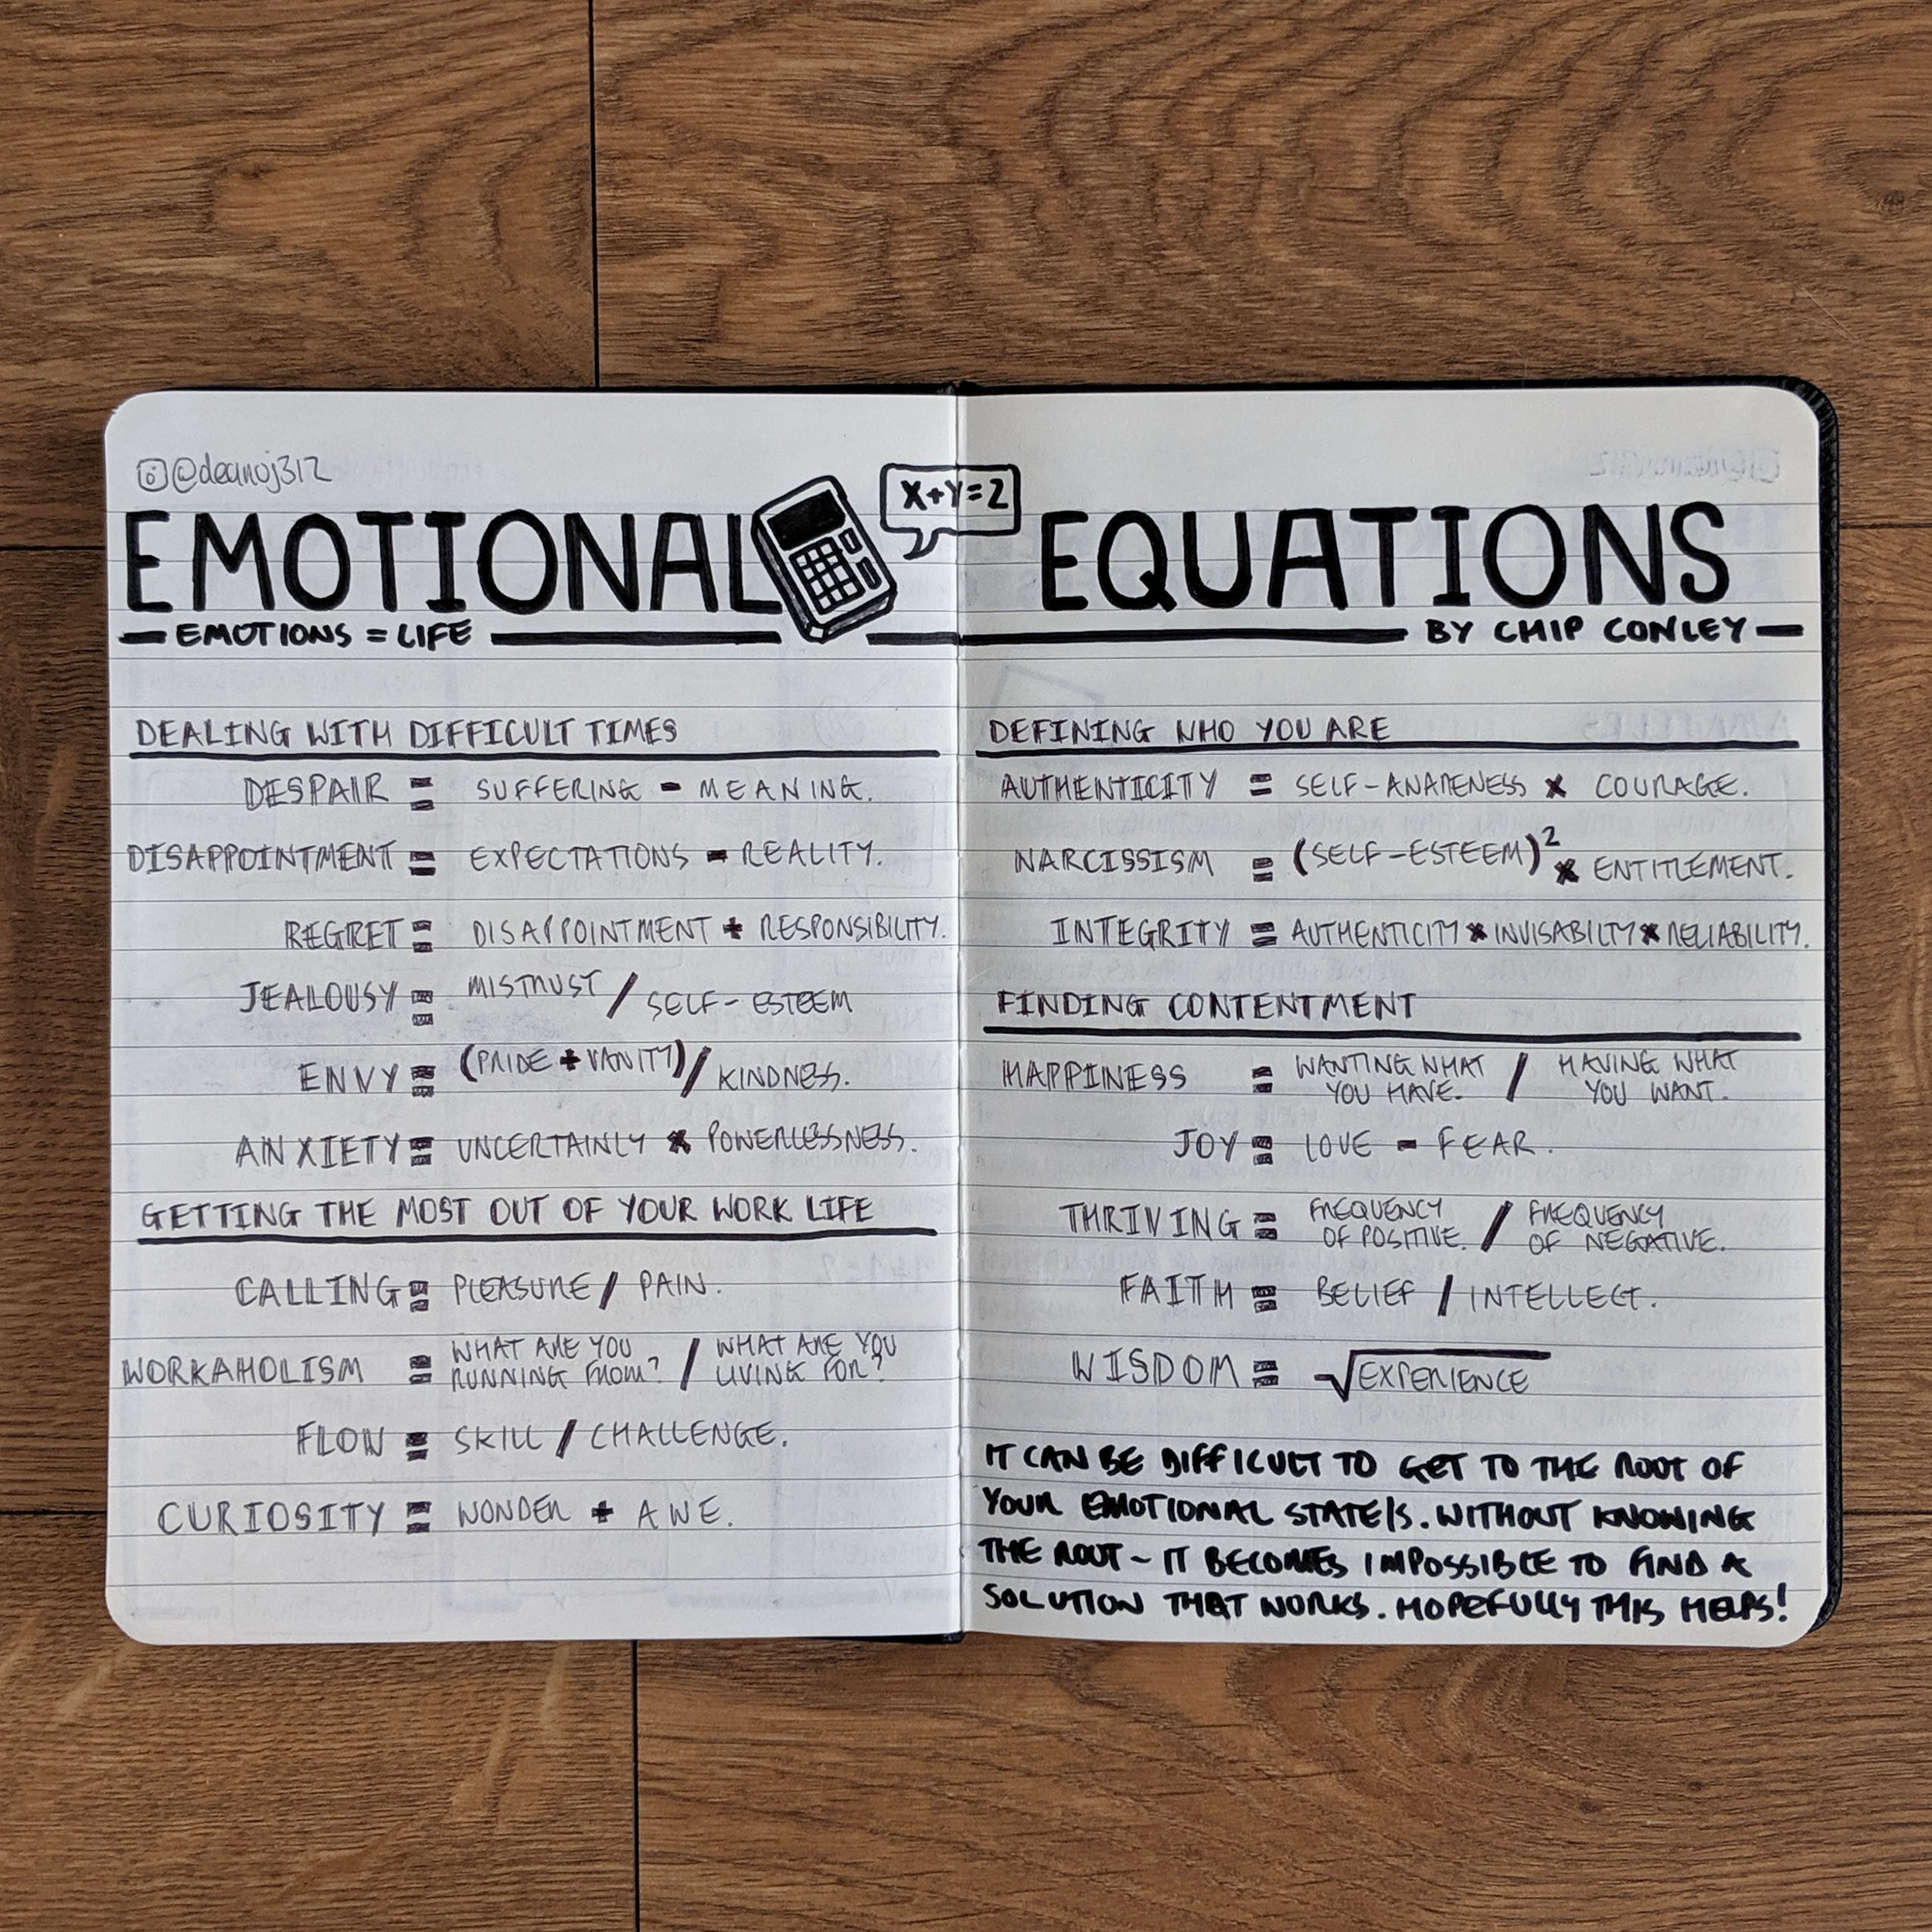 EmotionalEquations1.jpg